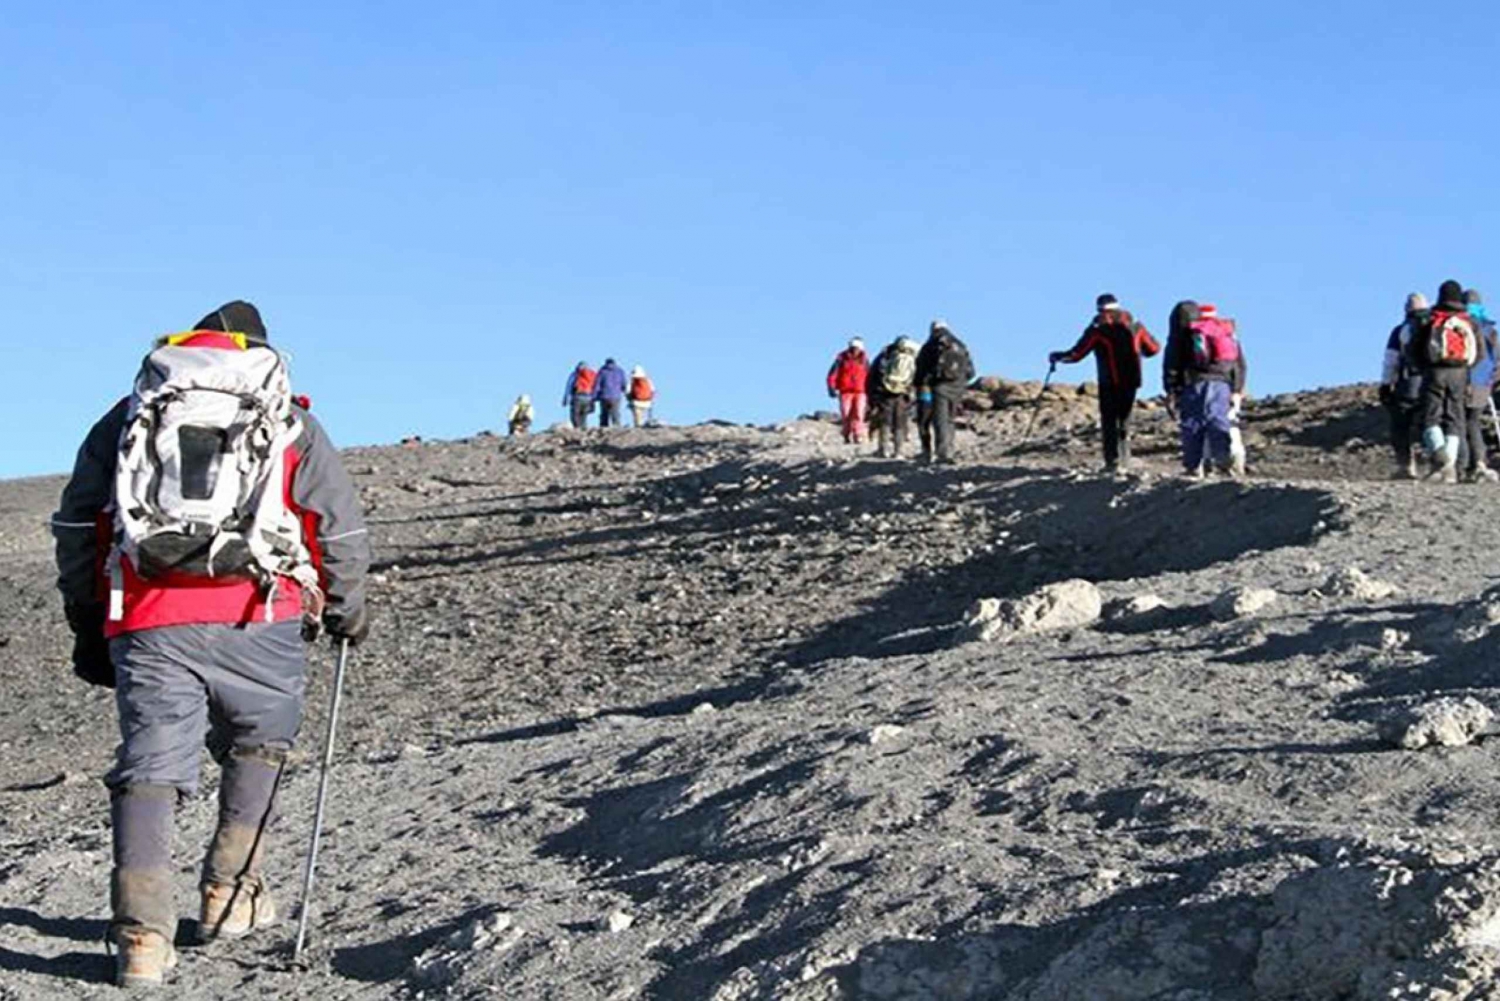 9-dagers bestigning av Kilimanjaro via Northern Circuit Route